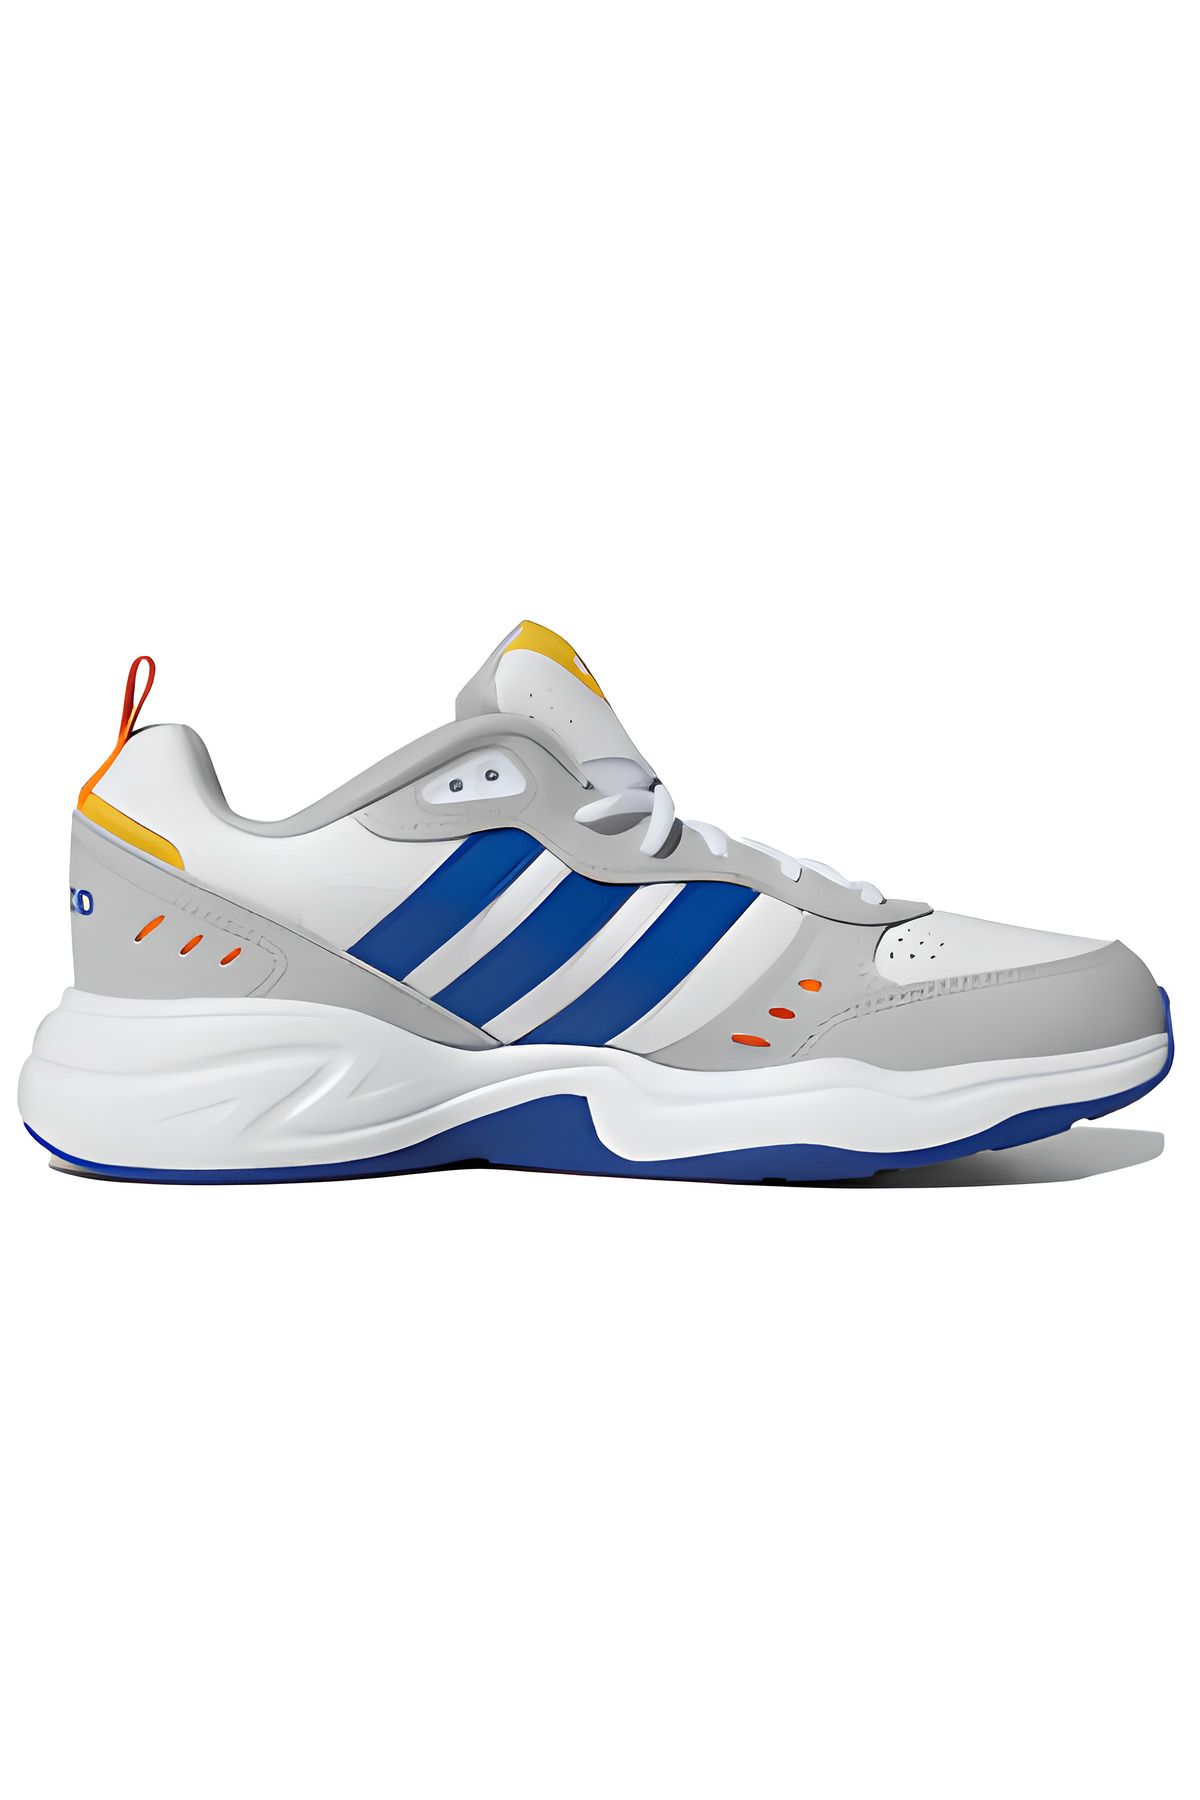 adidas neo Strutter Marathon Running Shoes/Sneakers FZ0660